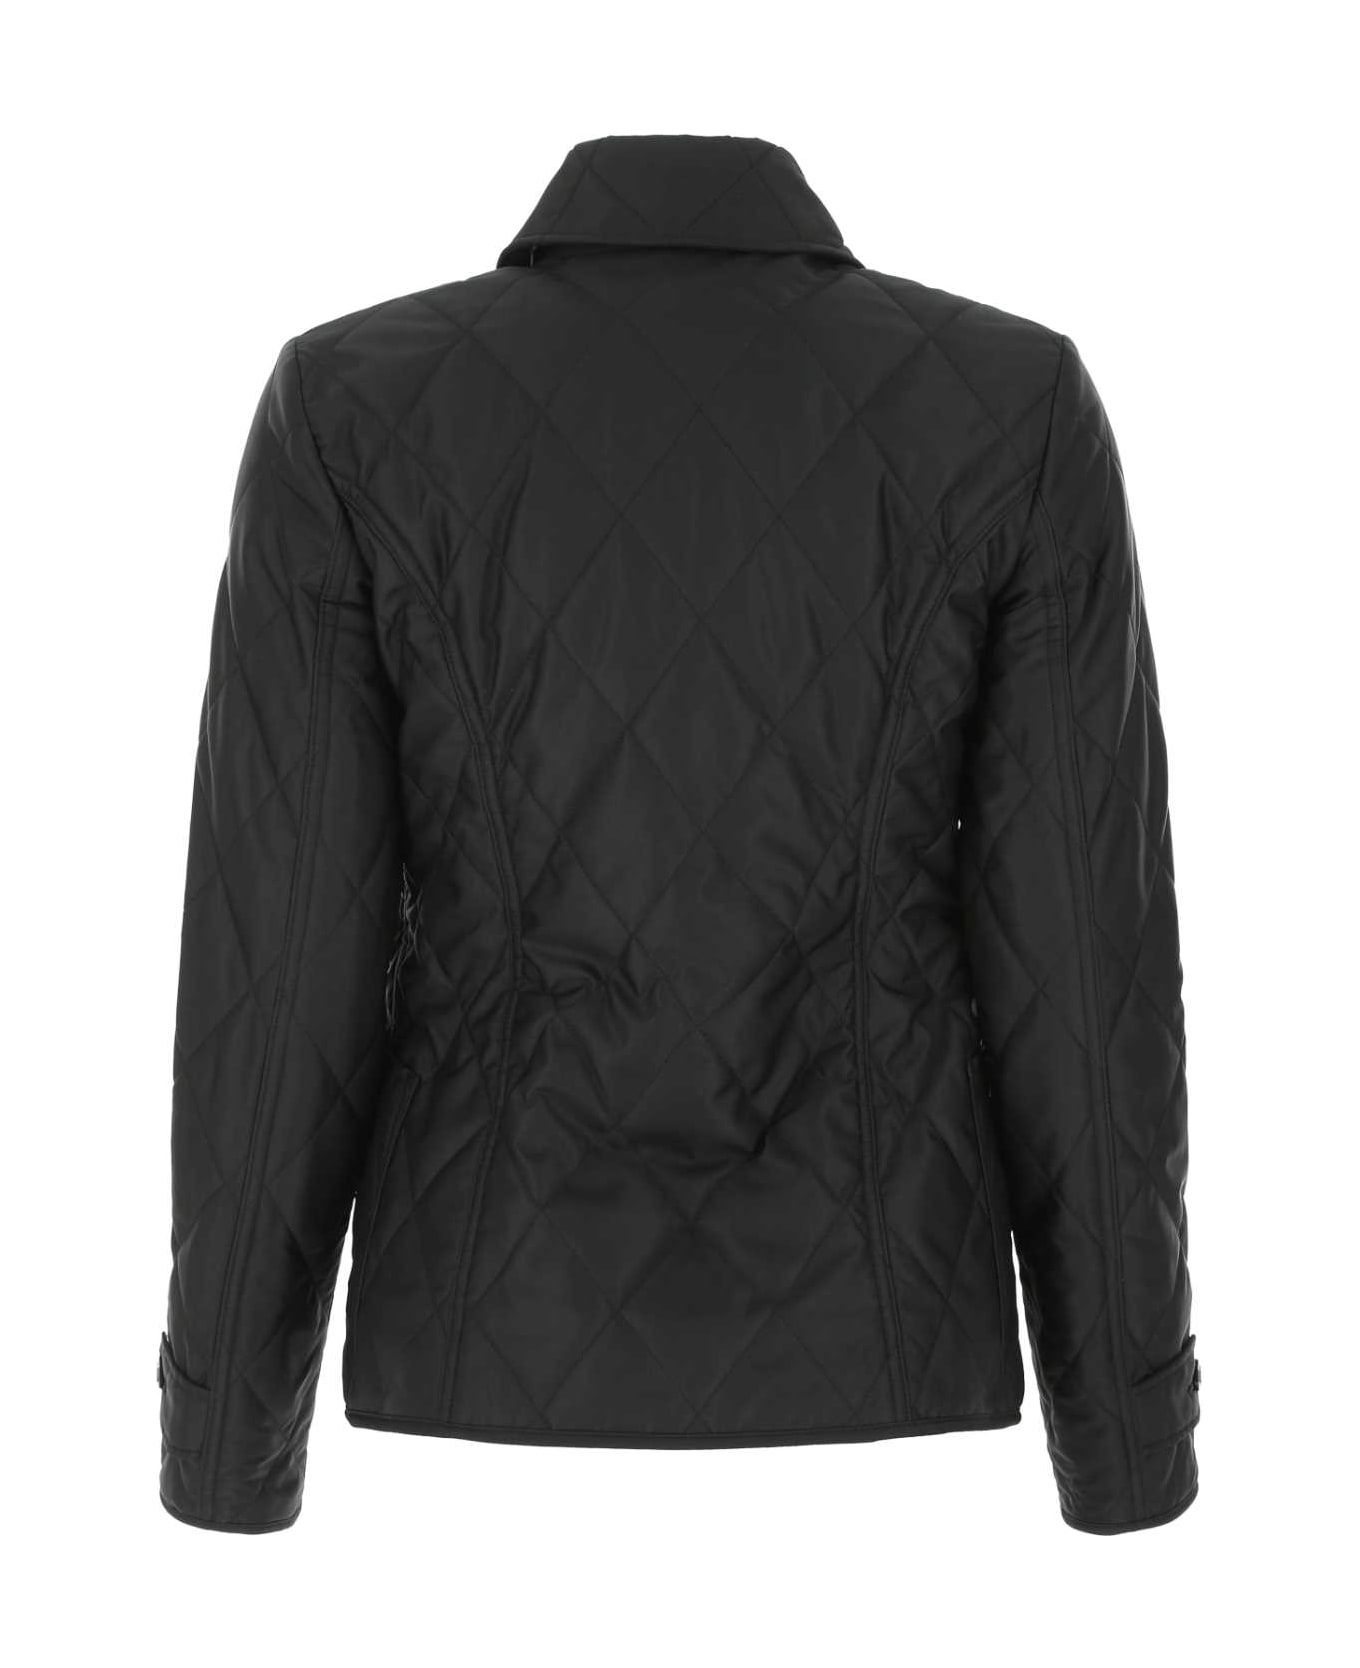 Burberry Black Polyester Jacket - A1189